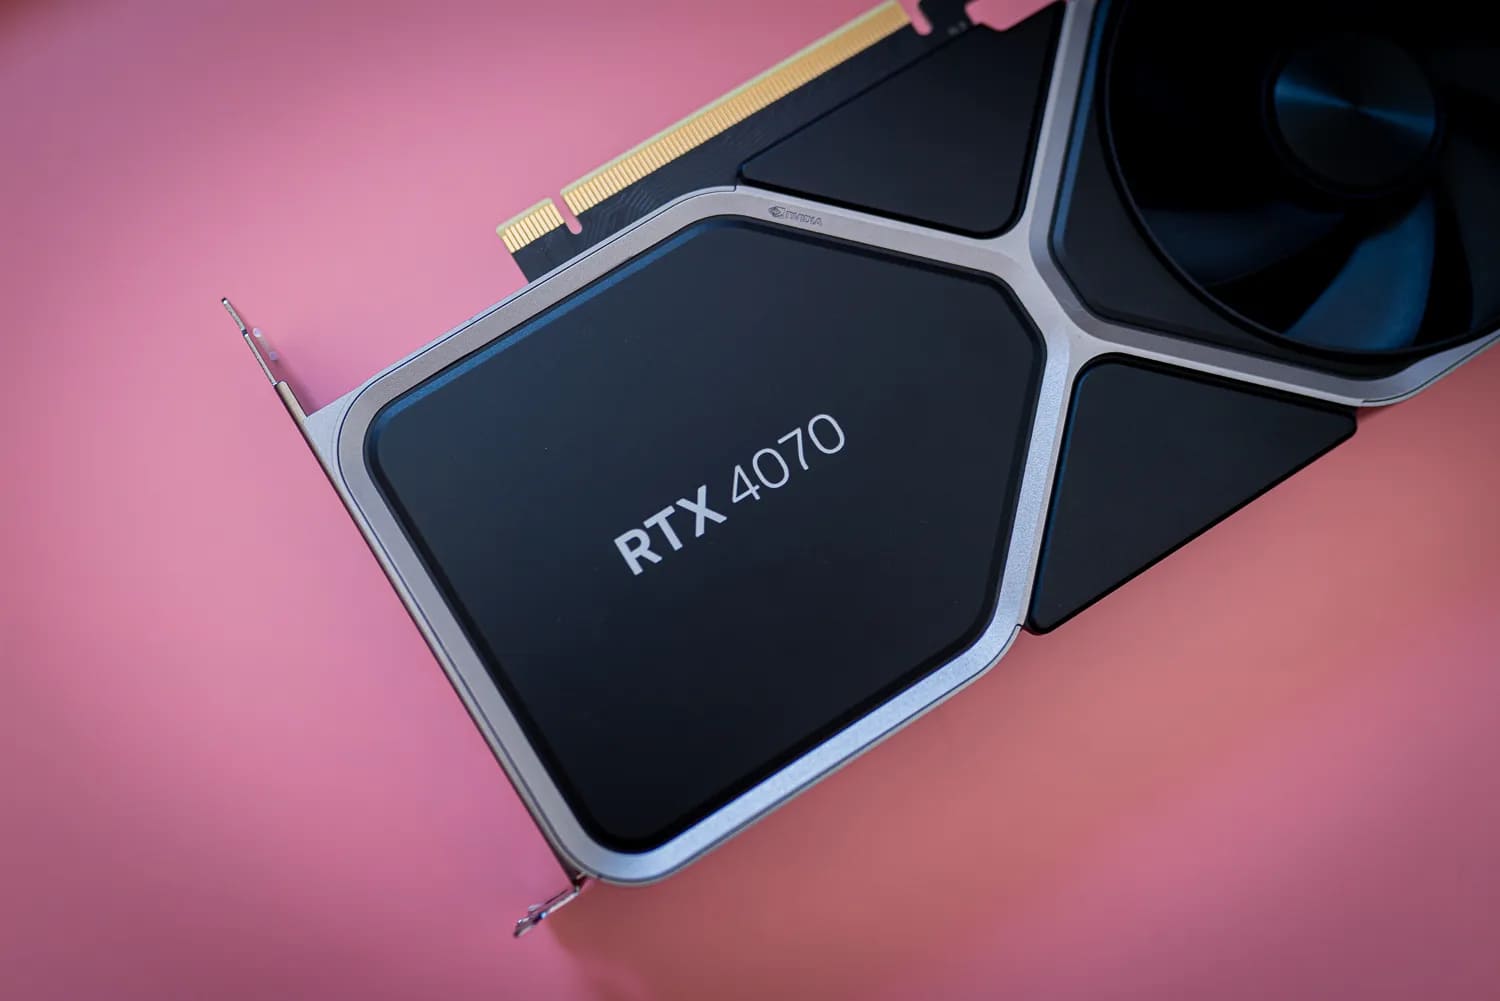 Nvidia RTX 4070